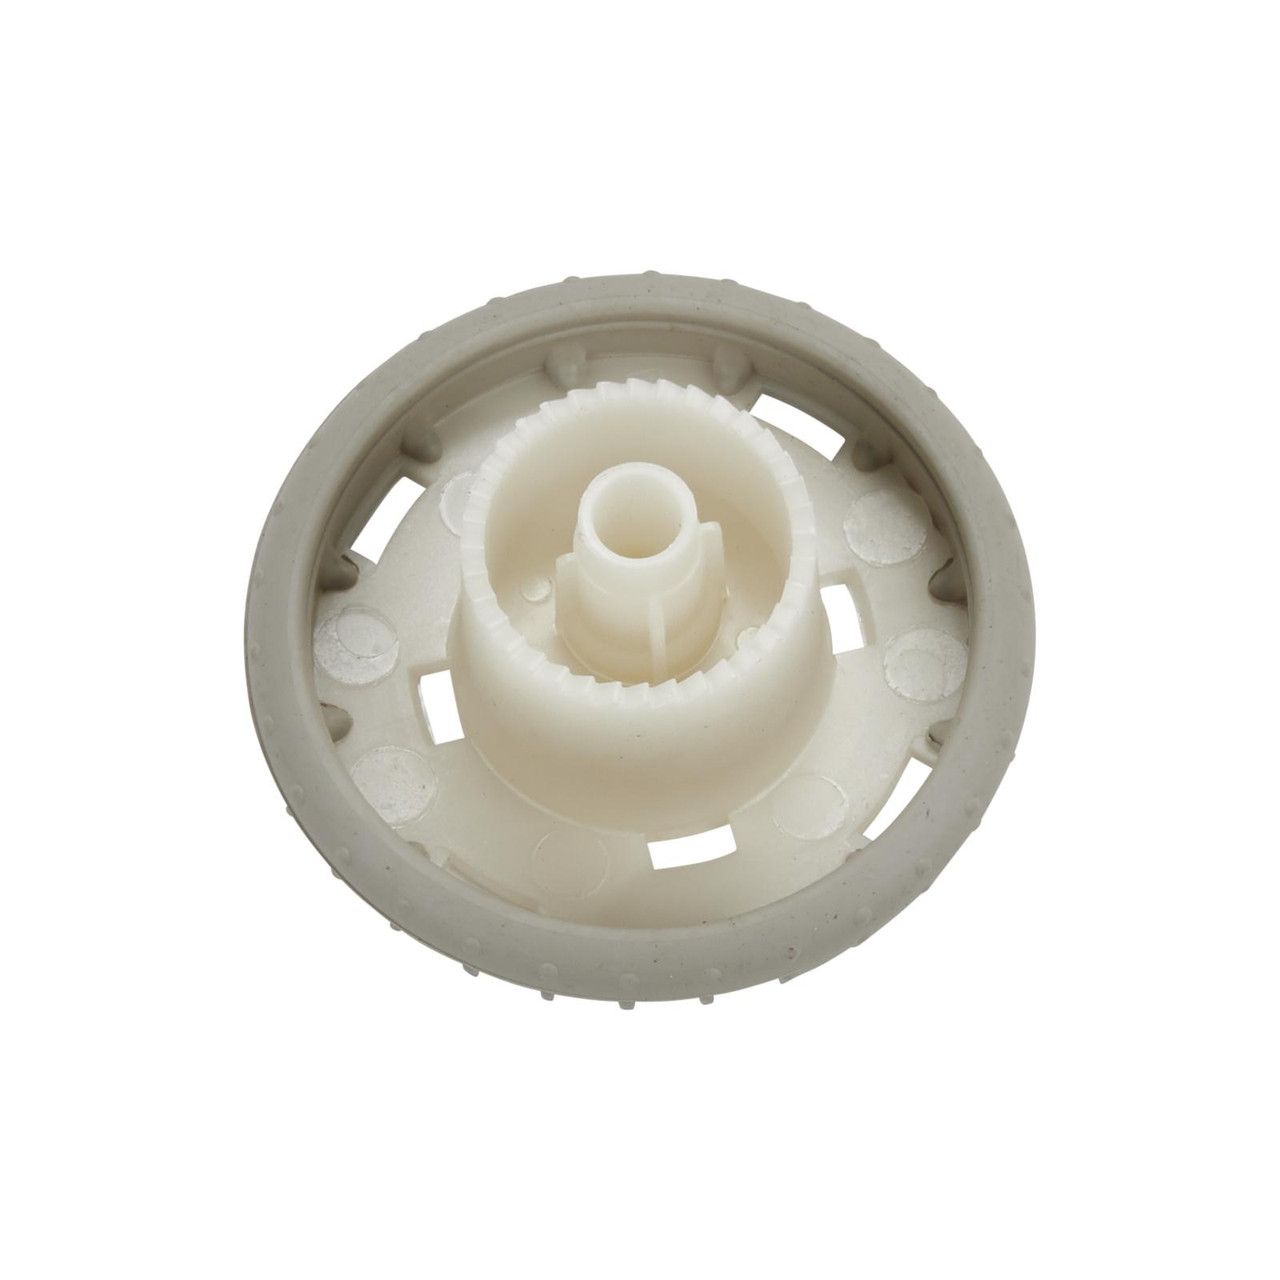 Whirlpool WP22001659 - Dryer Timer Knob